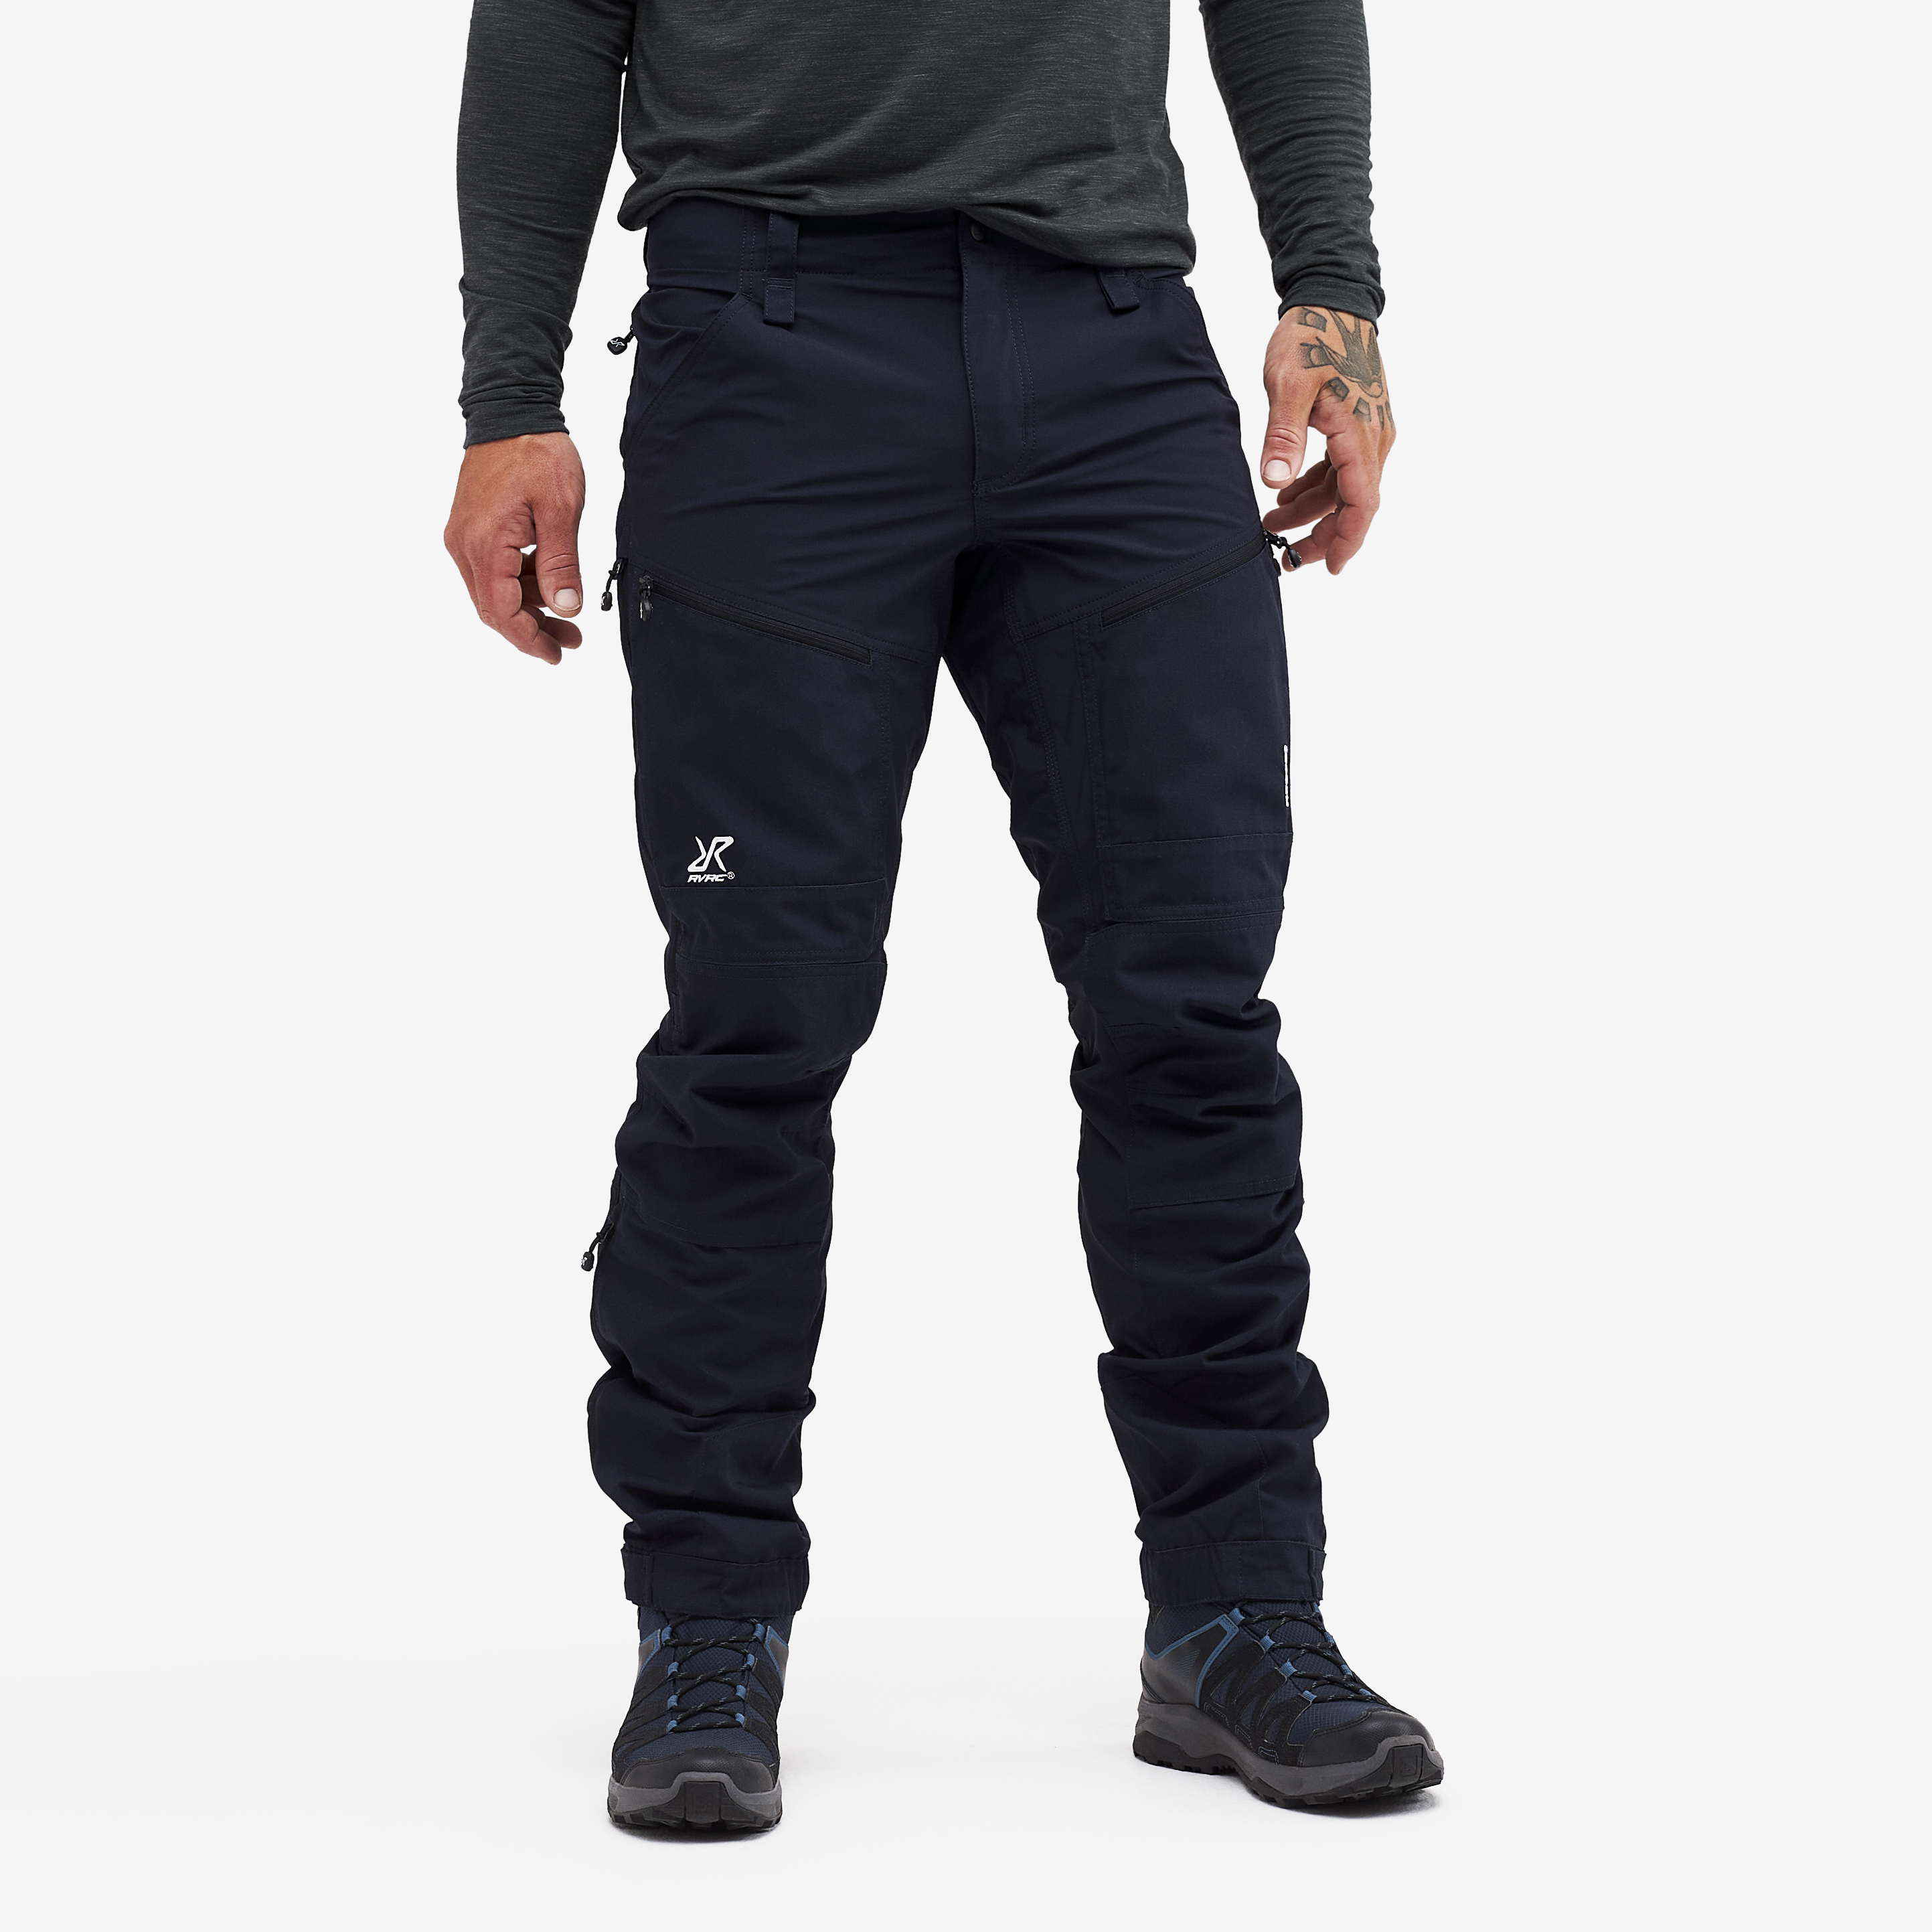 RVRC GP Pro Rescue hiking pants for men in dark blue